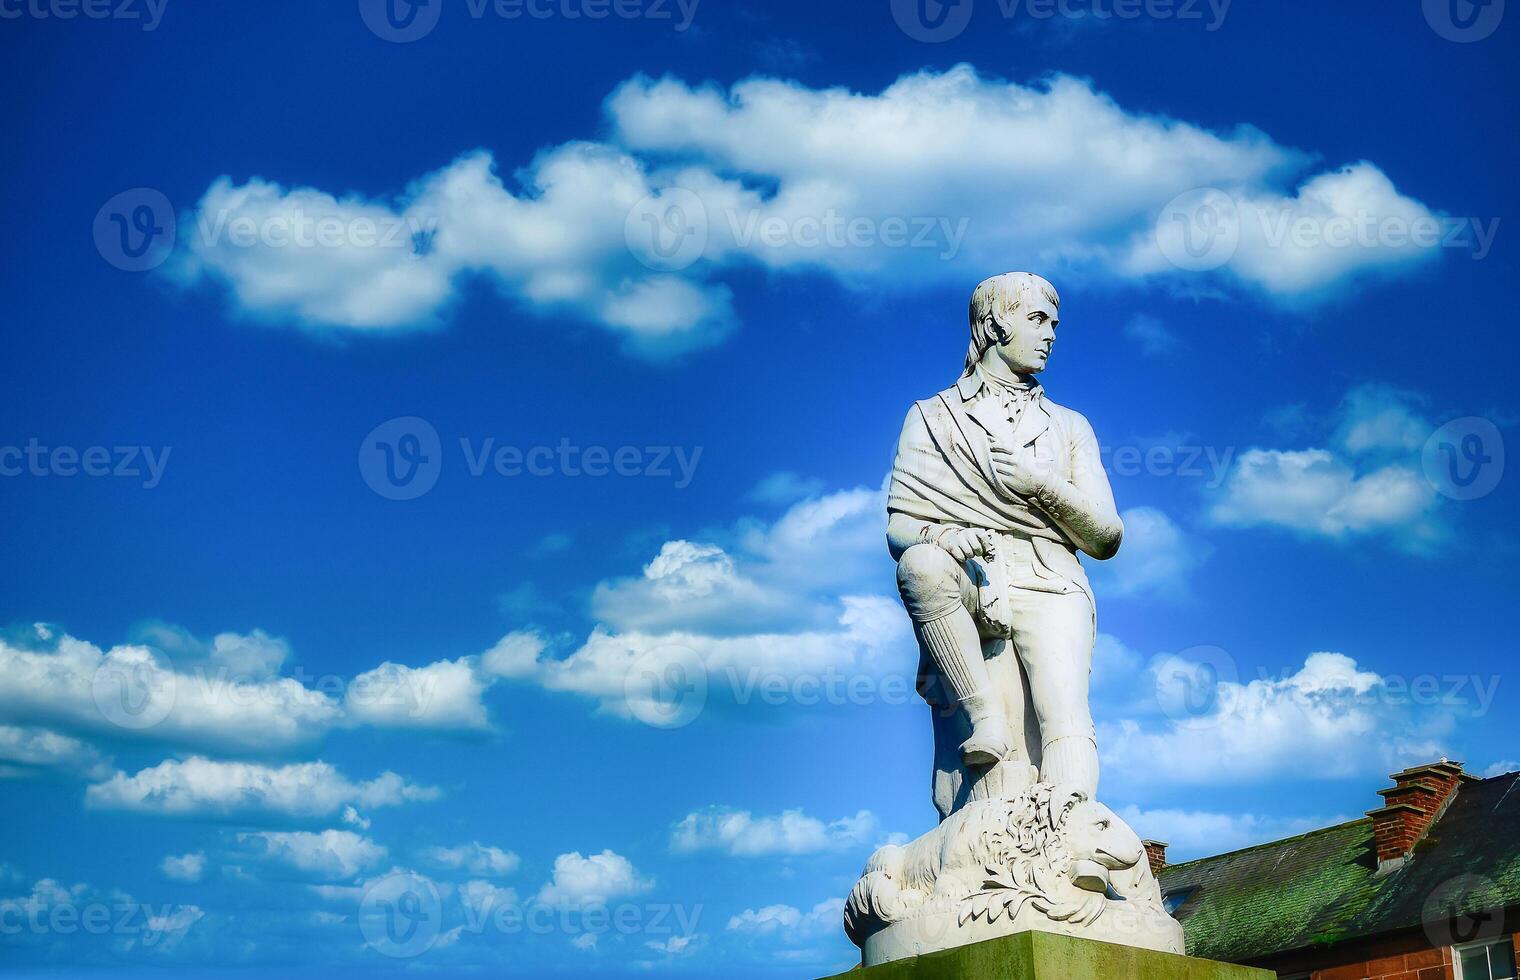 robbie ustioni statua su blu cielo a stupidaggini, Scozia. foto